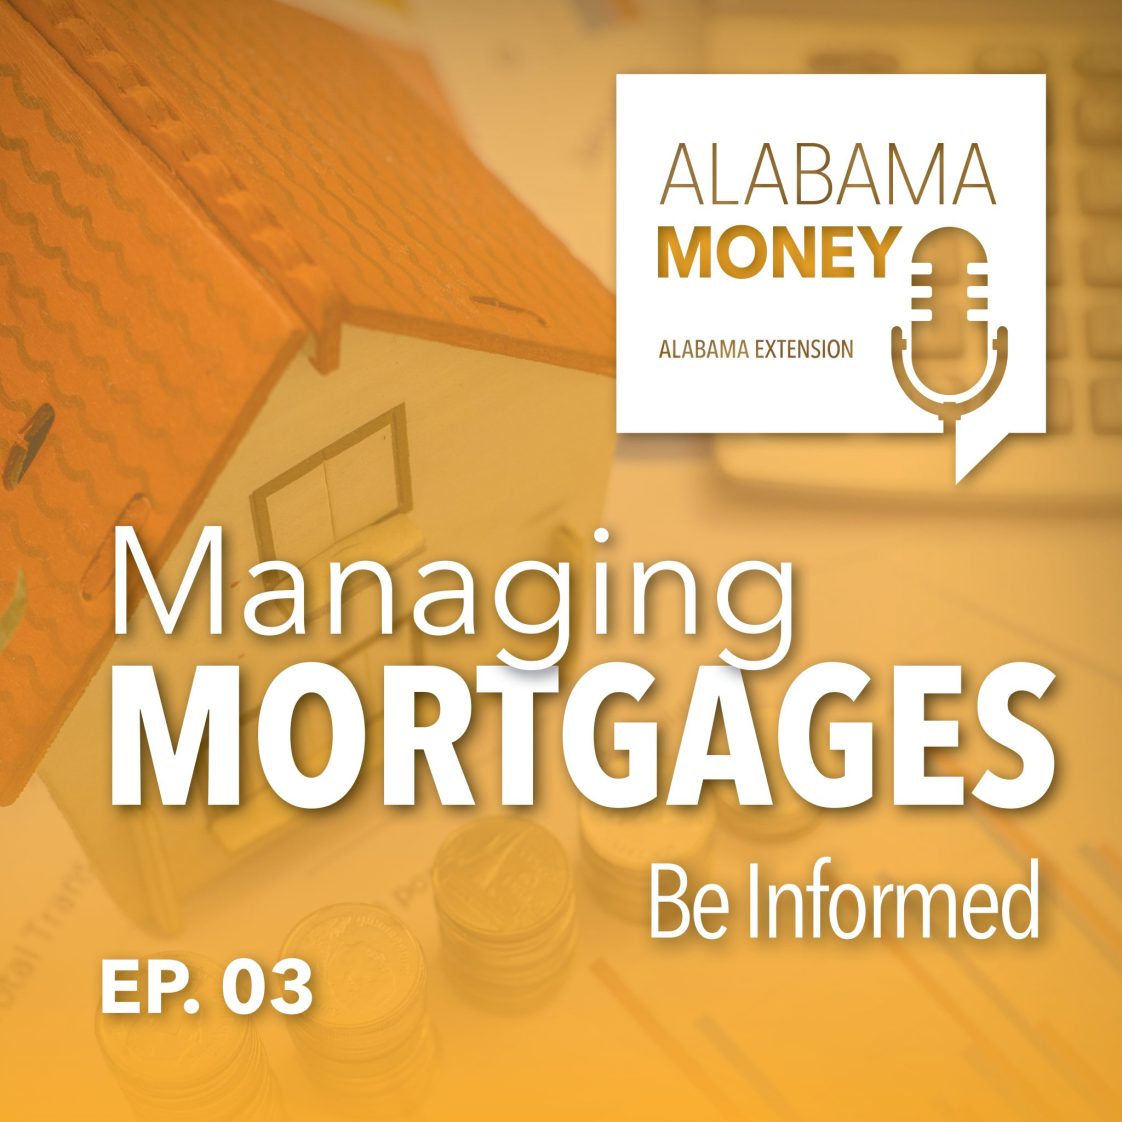 Alabama Money Podcast: Managing Mortgages:Be informed